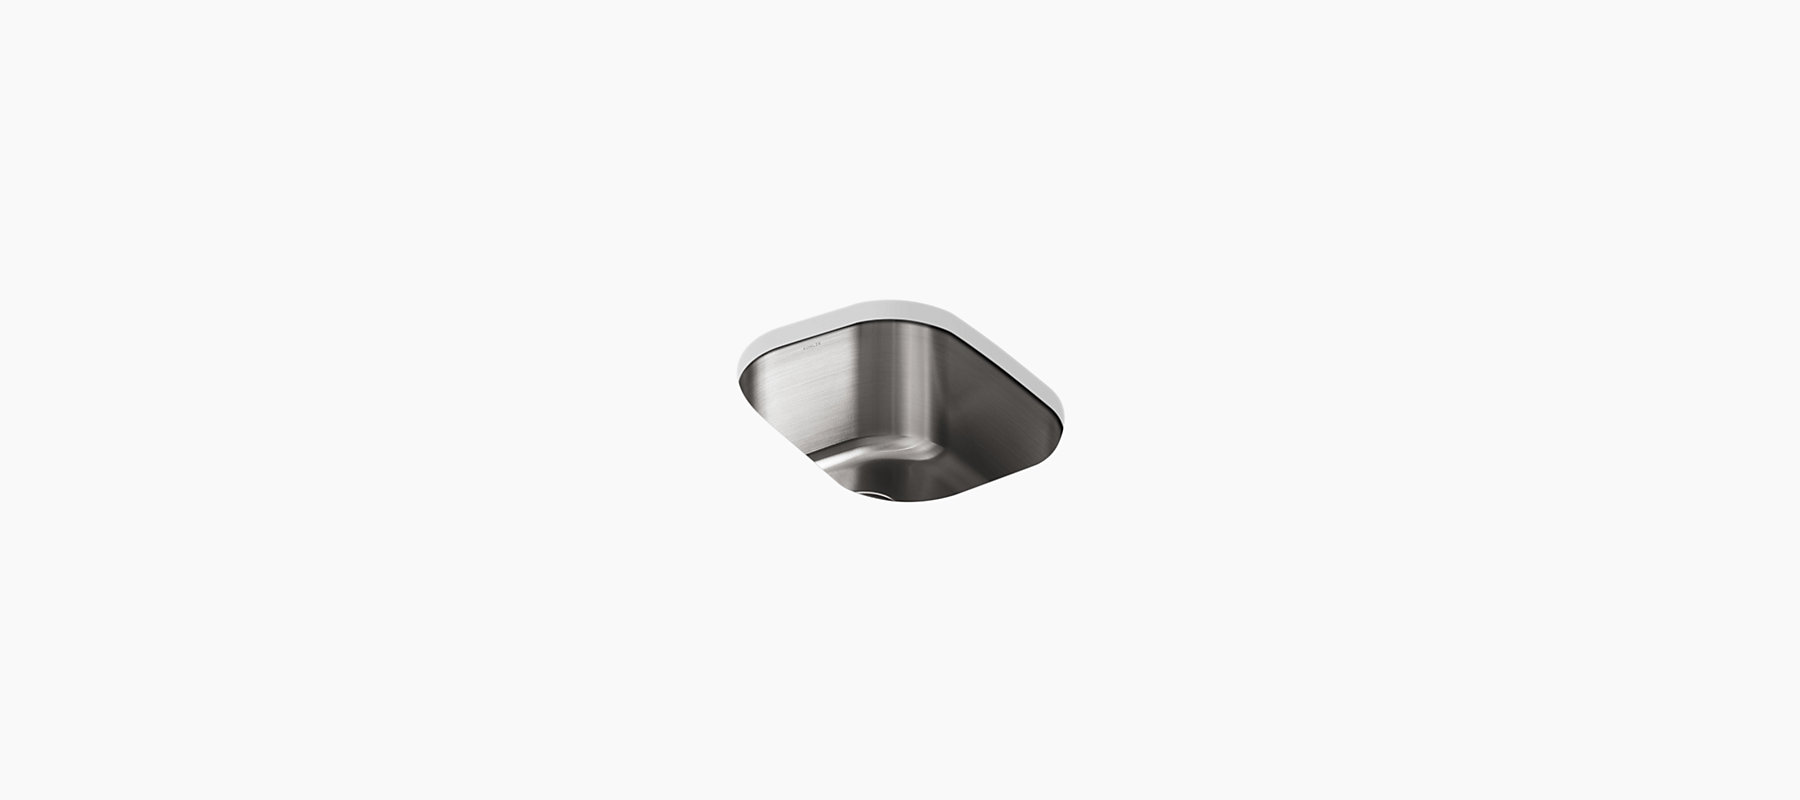 Stainless Steel KOHLER K-3164-NA Undertone Rounded Single-Basin Undercounter Kitchen Sink